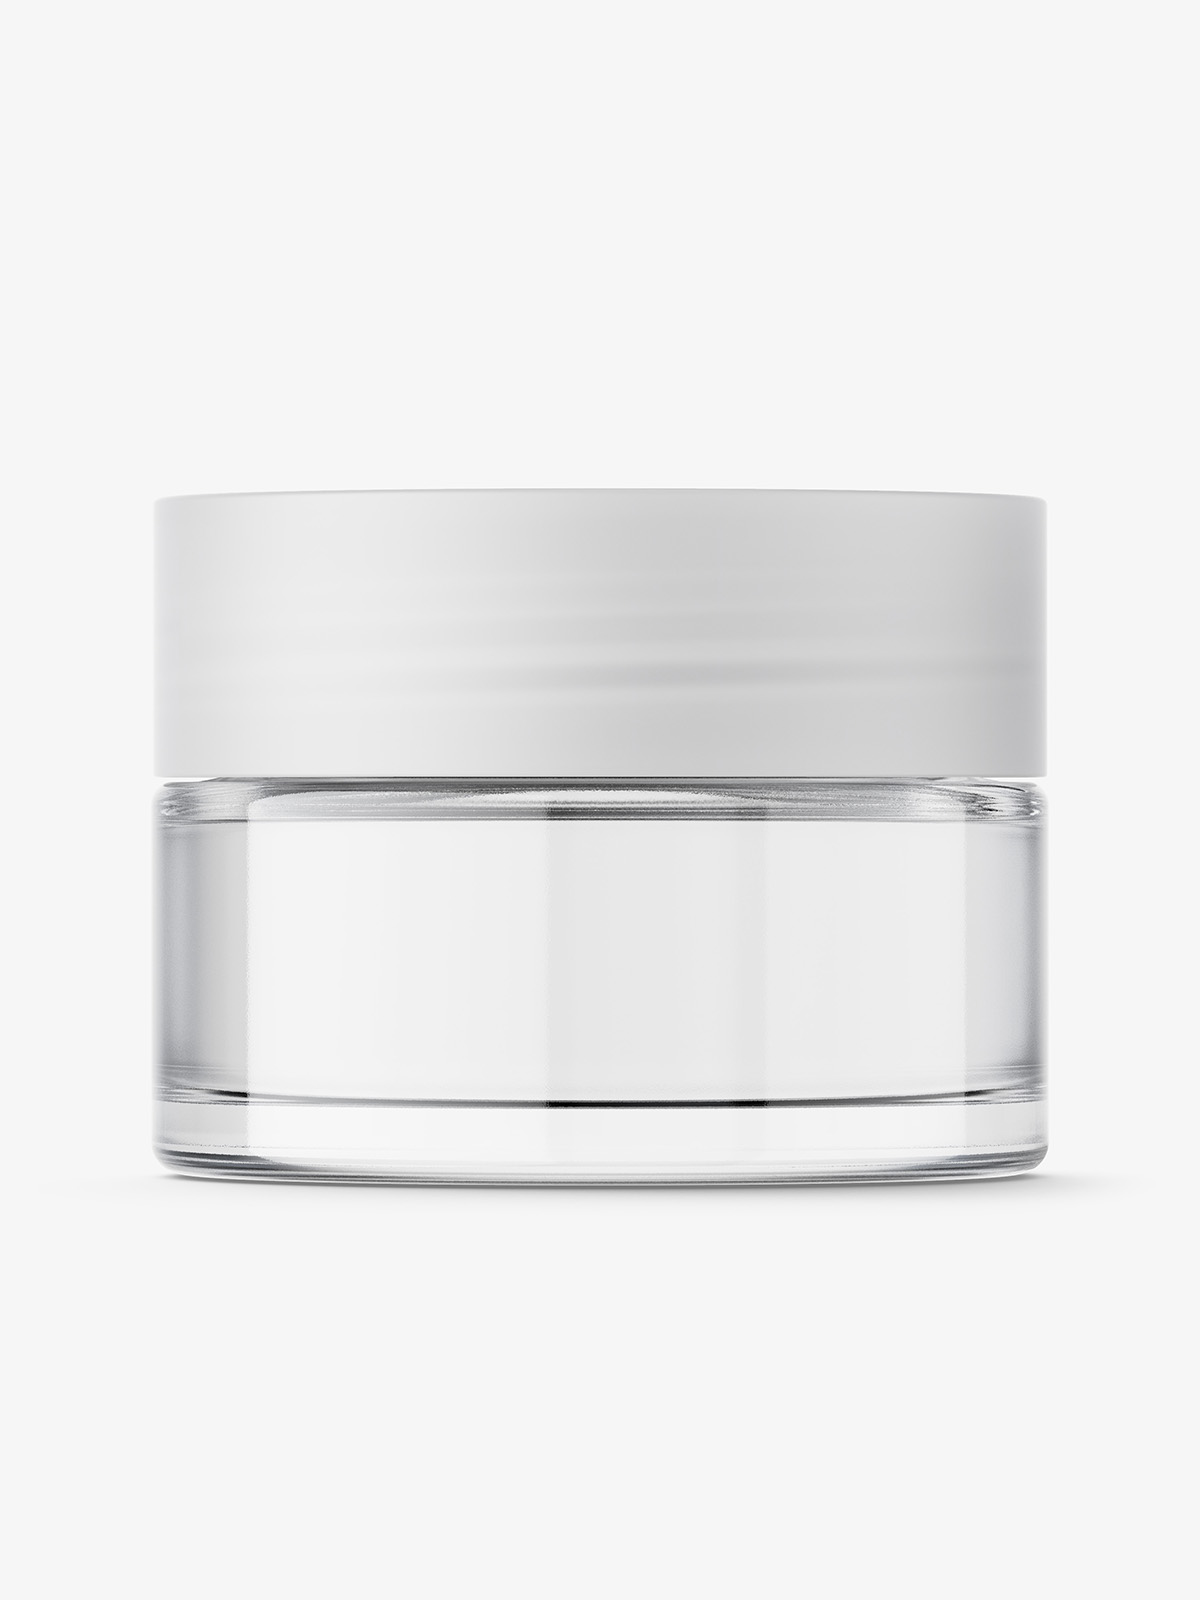 Cosmetic glass jar mockup / clear - Smarty Mockups